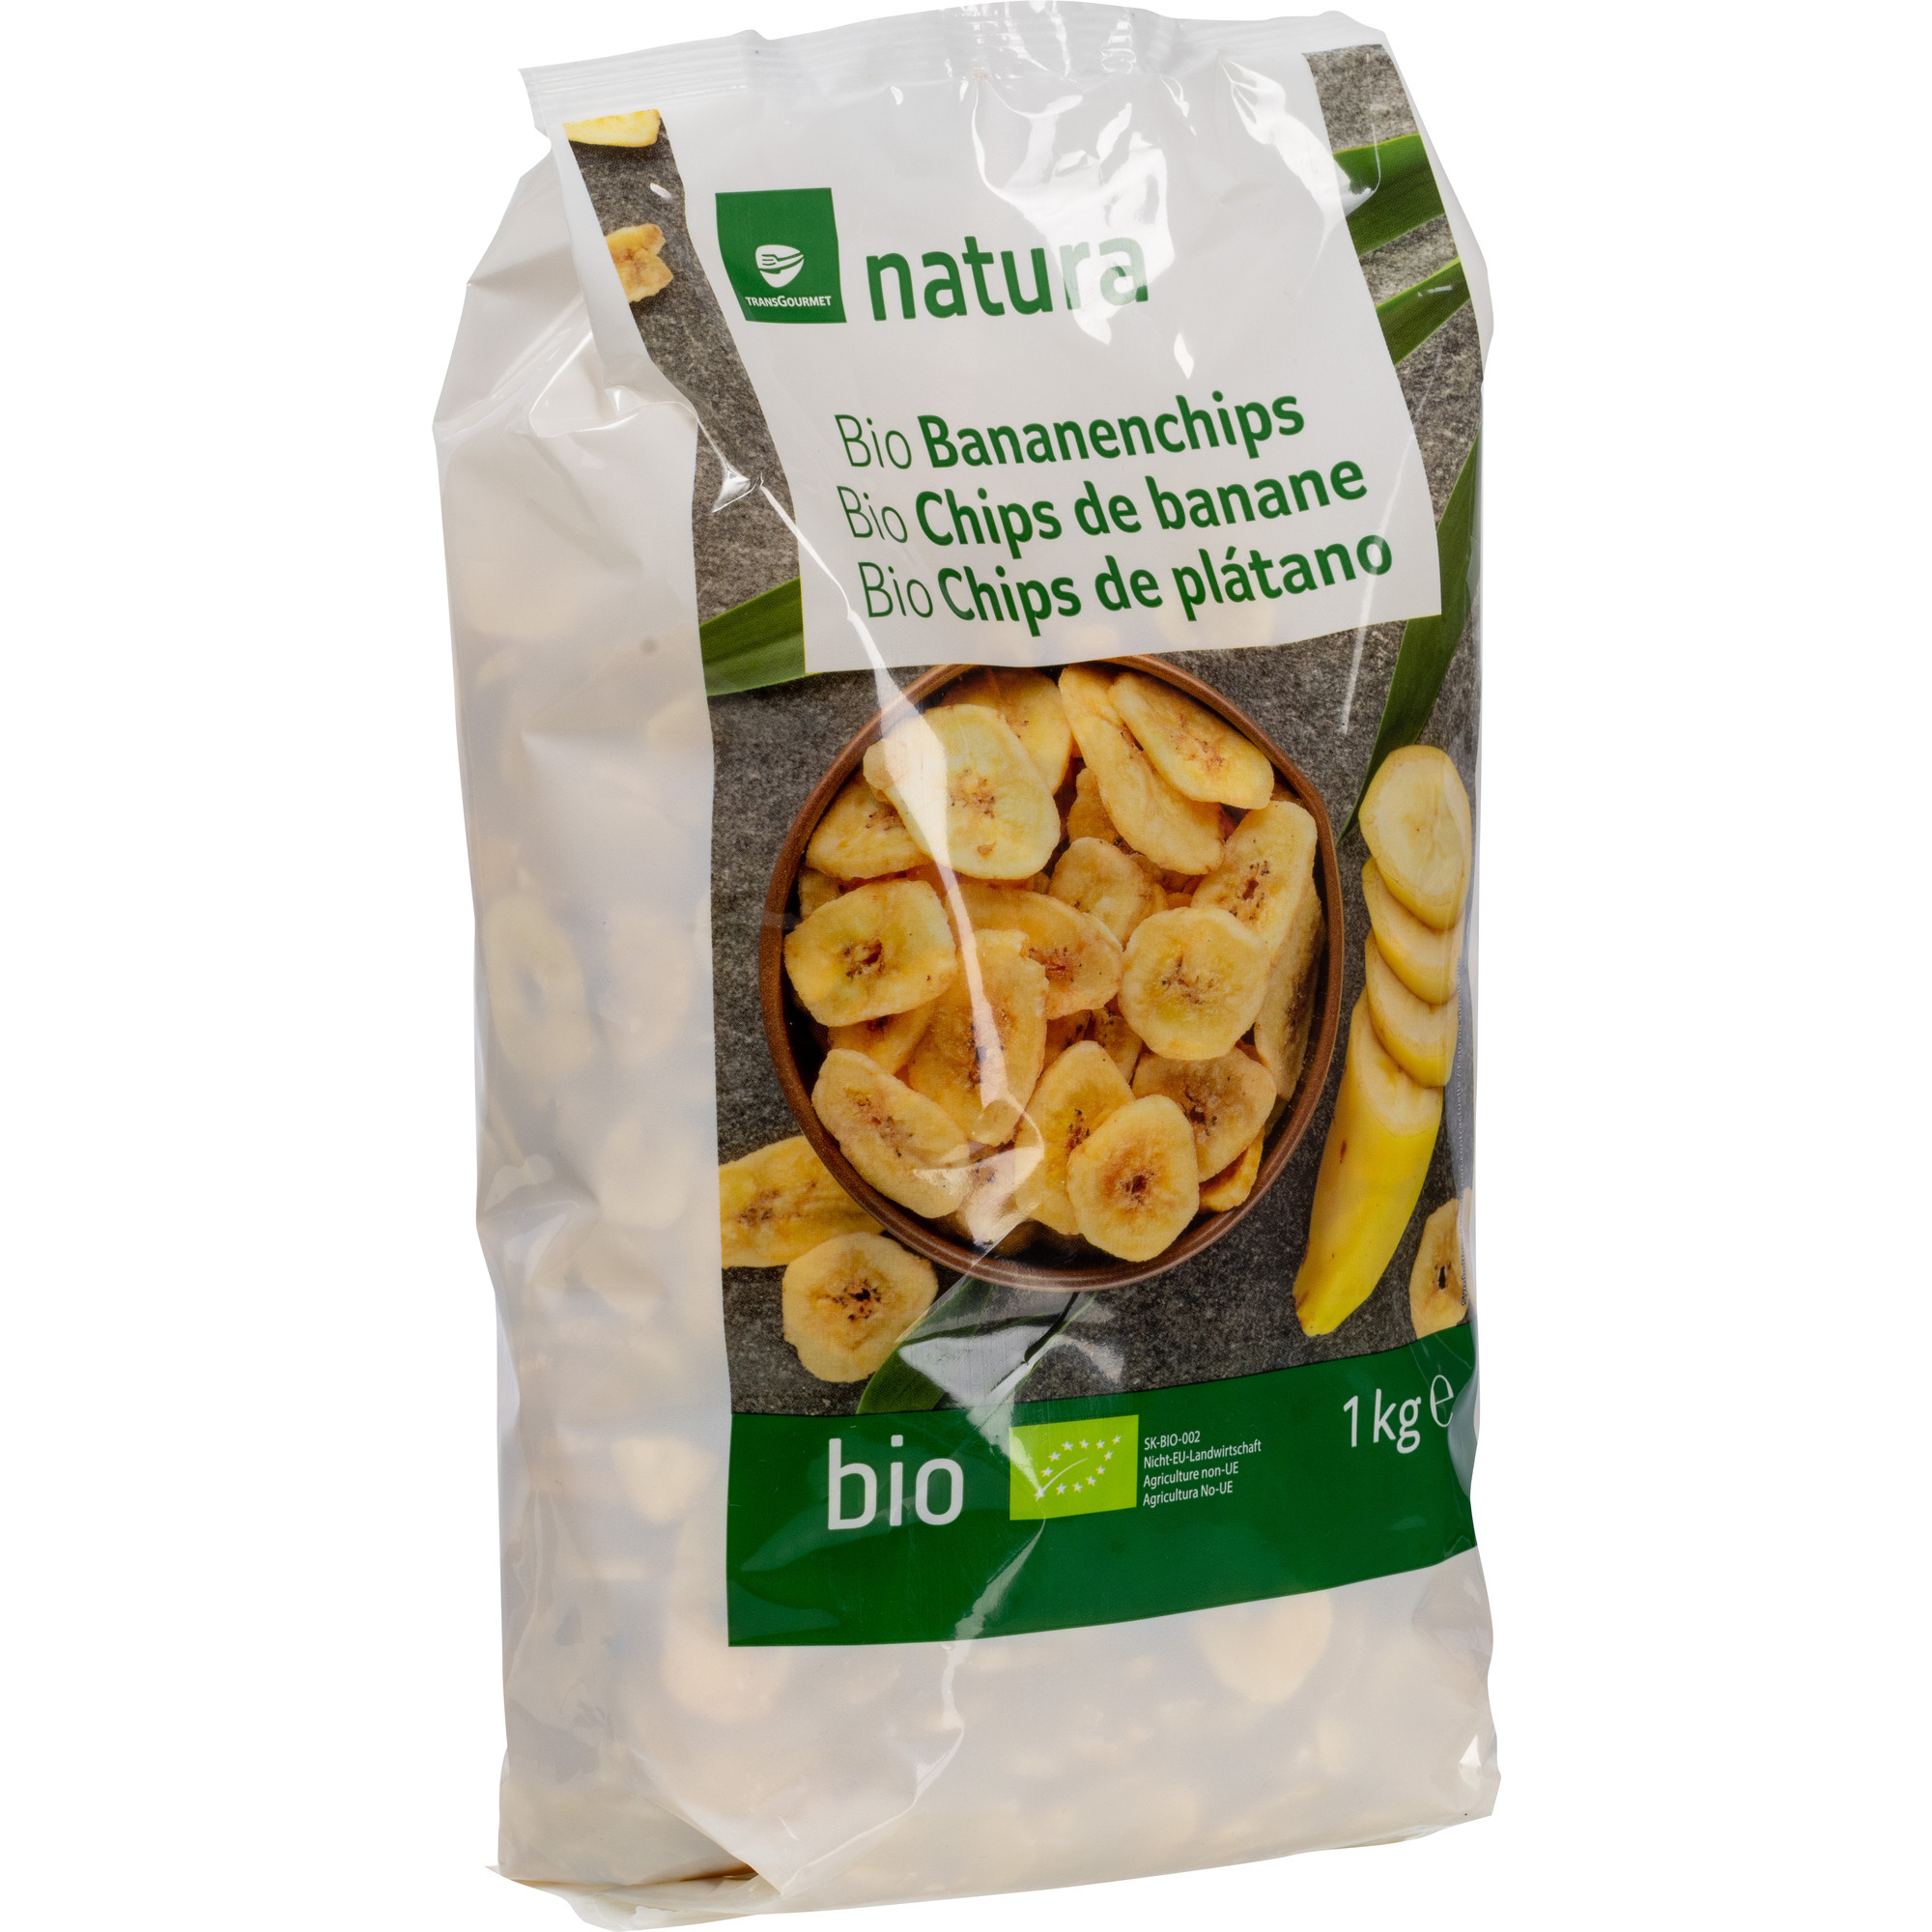 Natura Bio Bananenchips 1kg